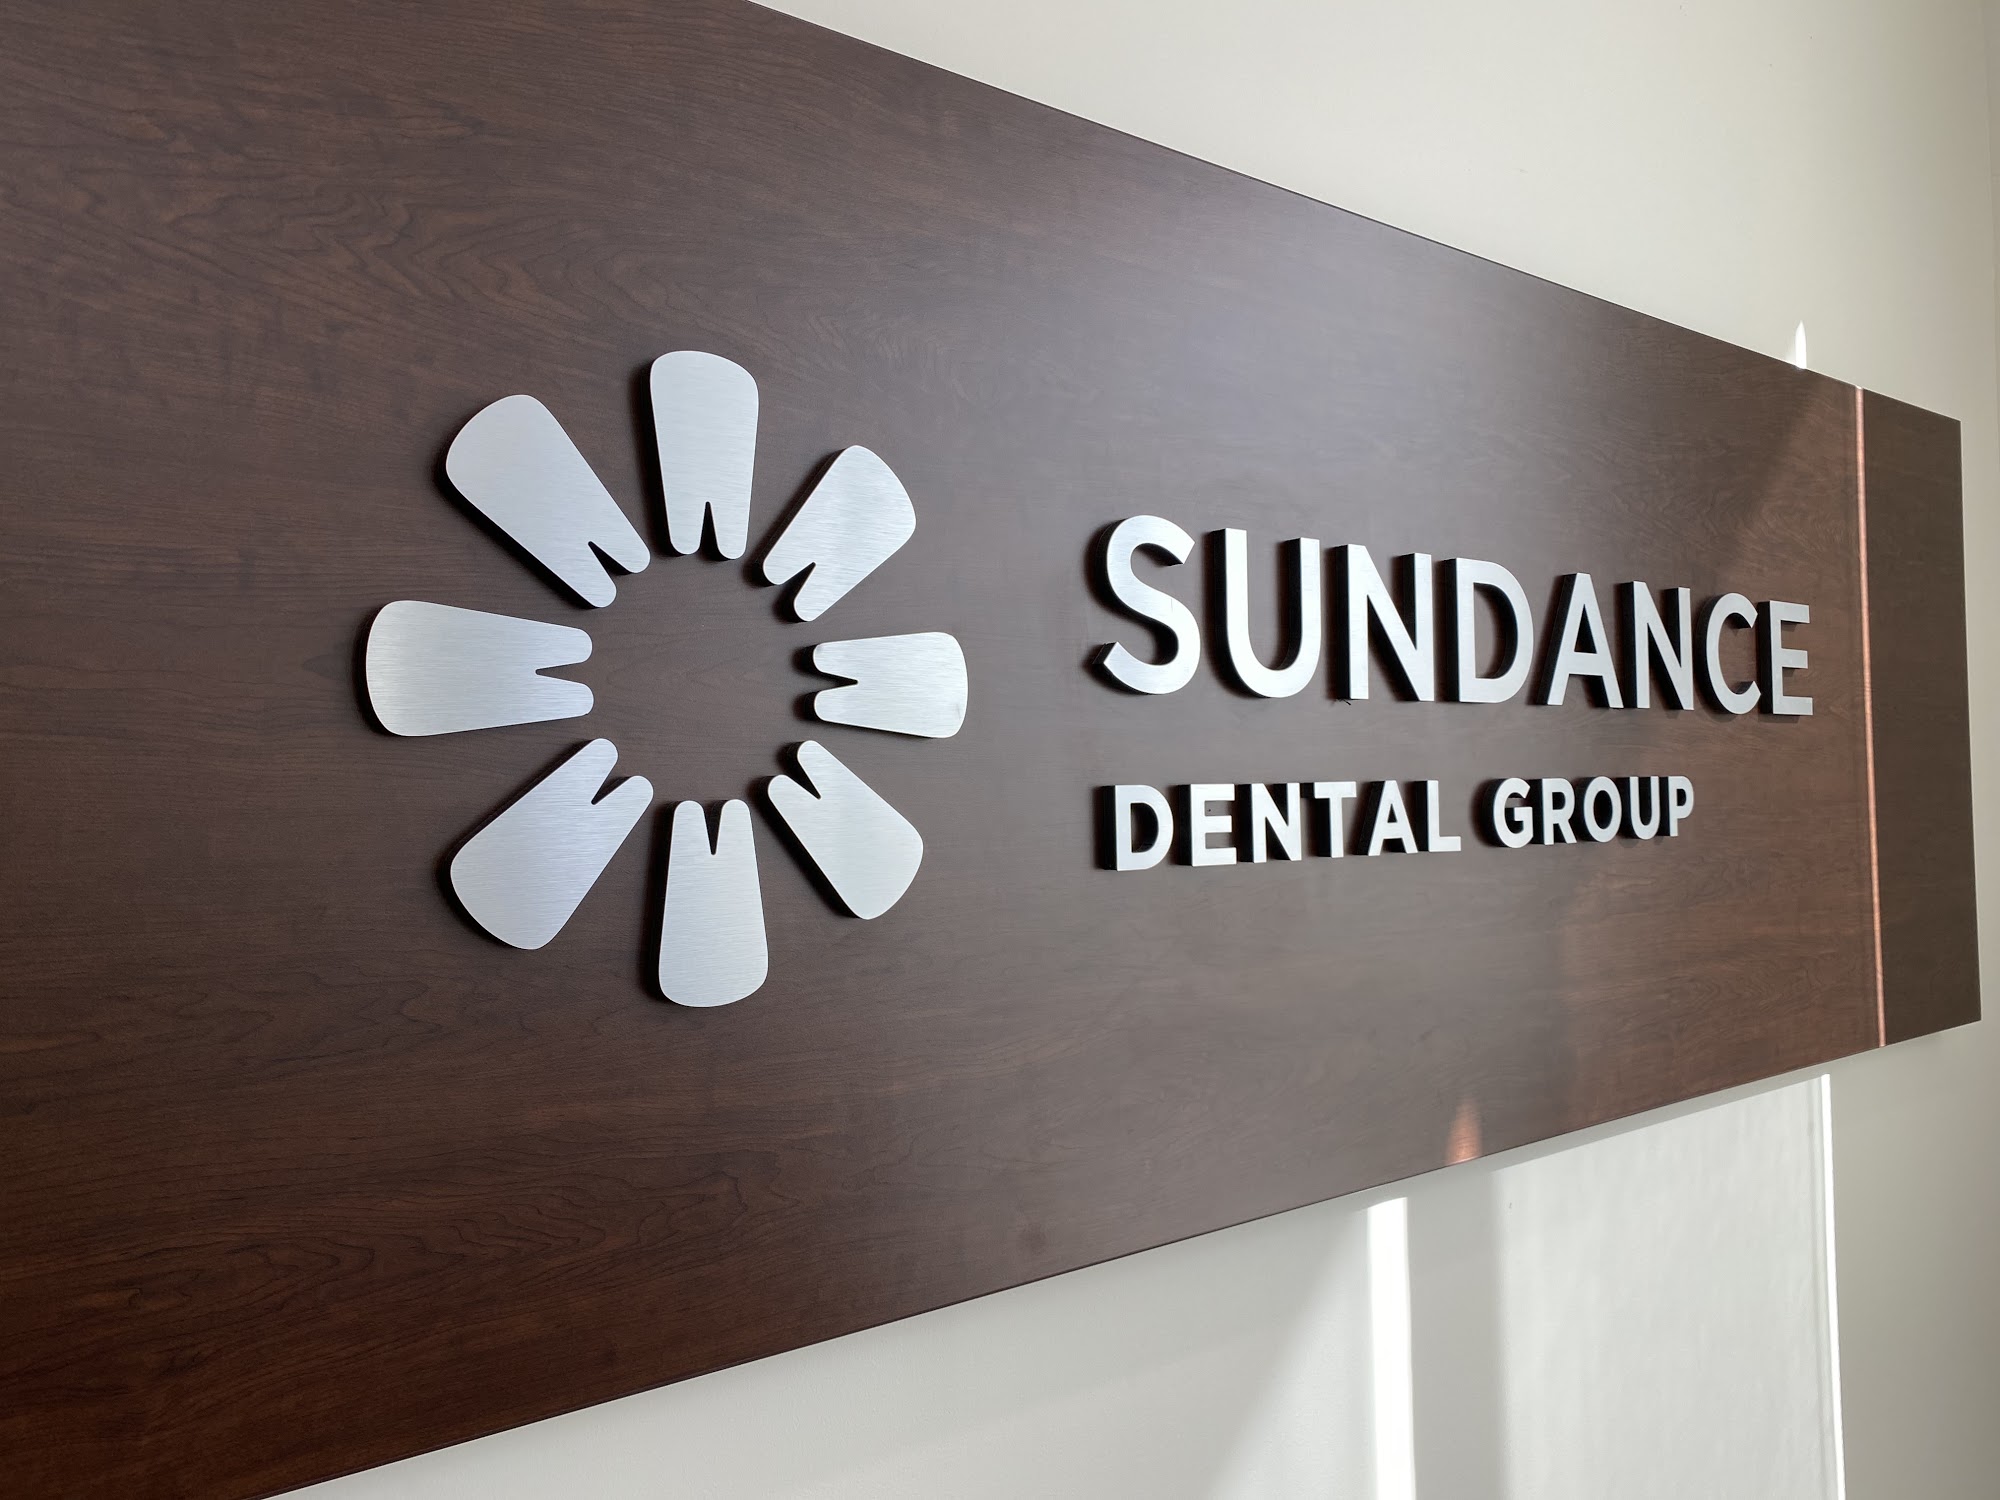 Sundance Dental Group